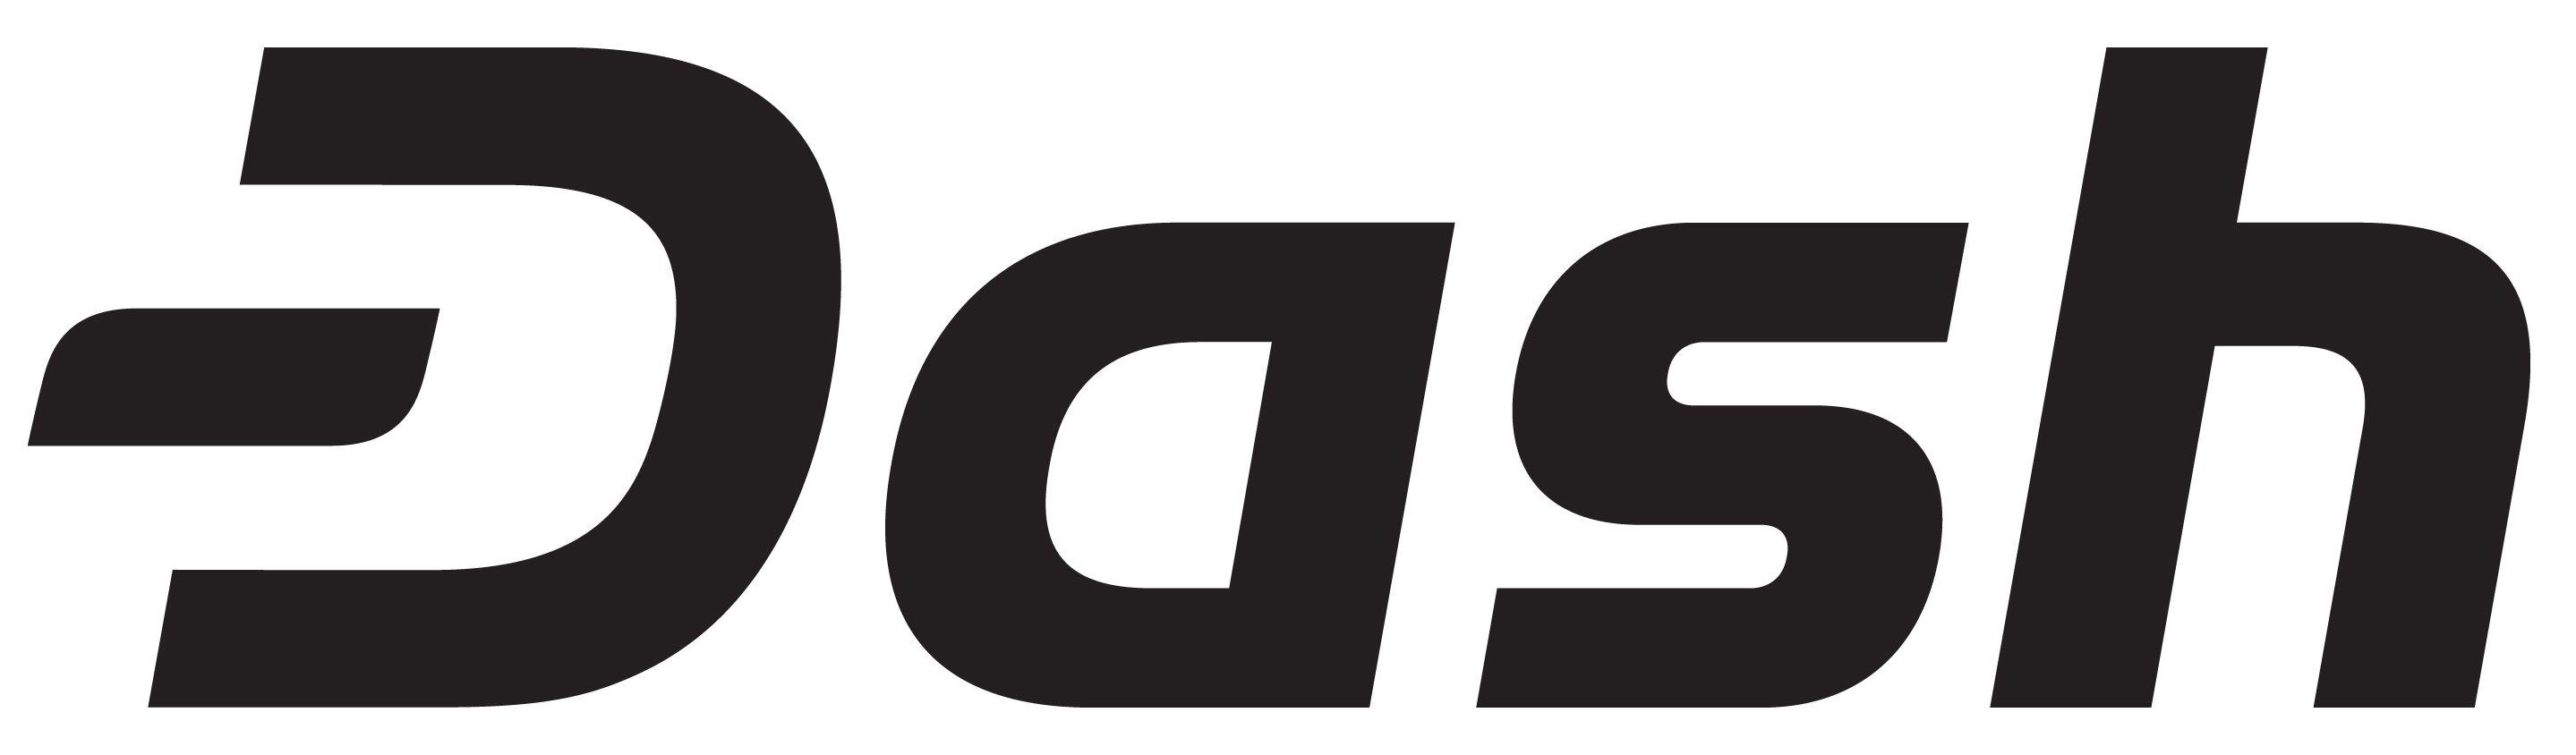 Dash White Logo - Dash Official Website. Dash Crypto Currency